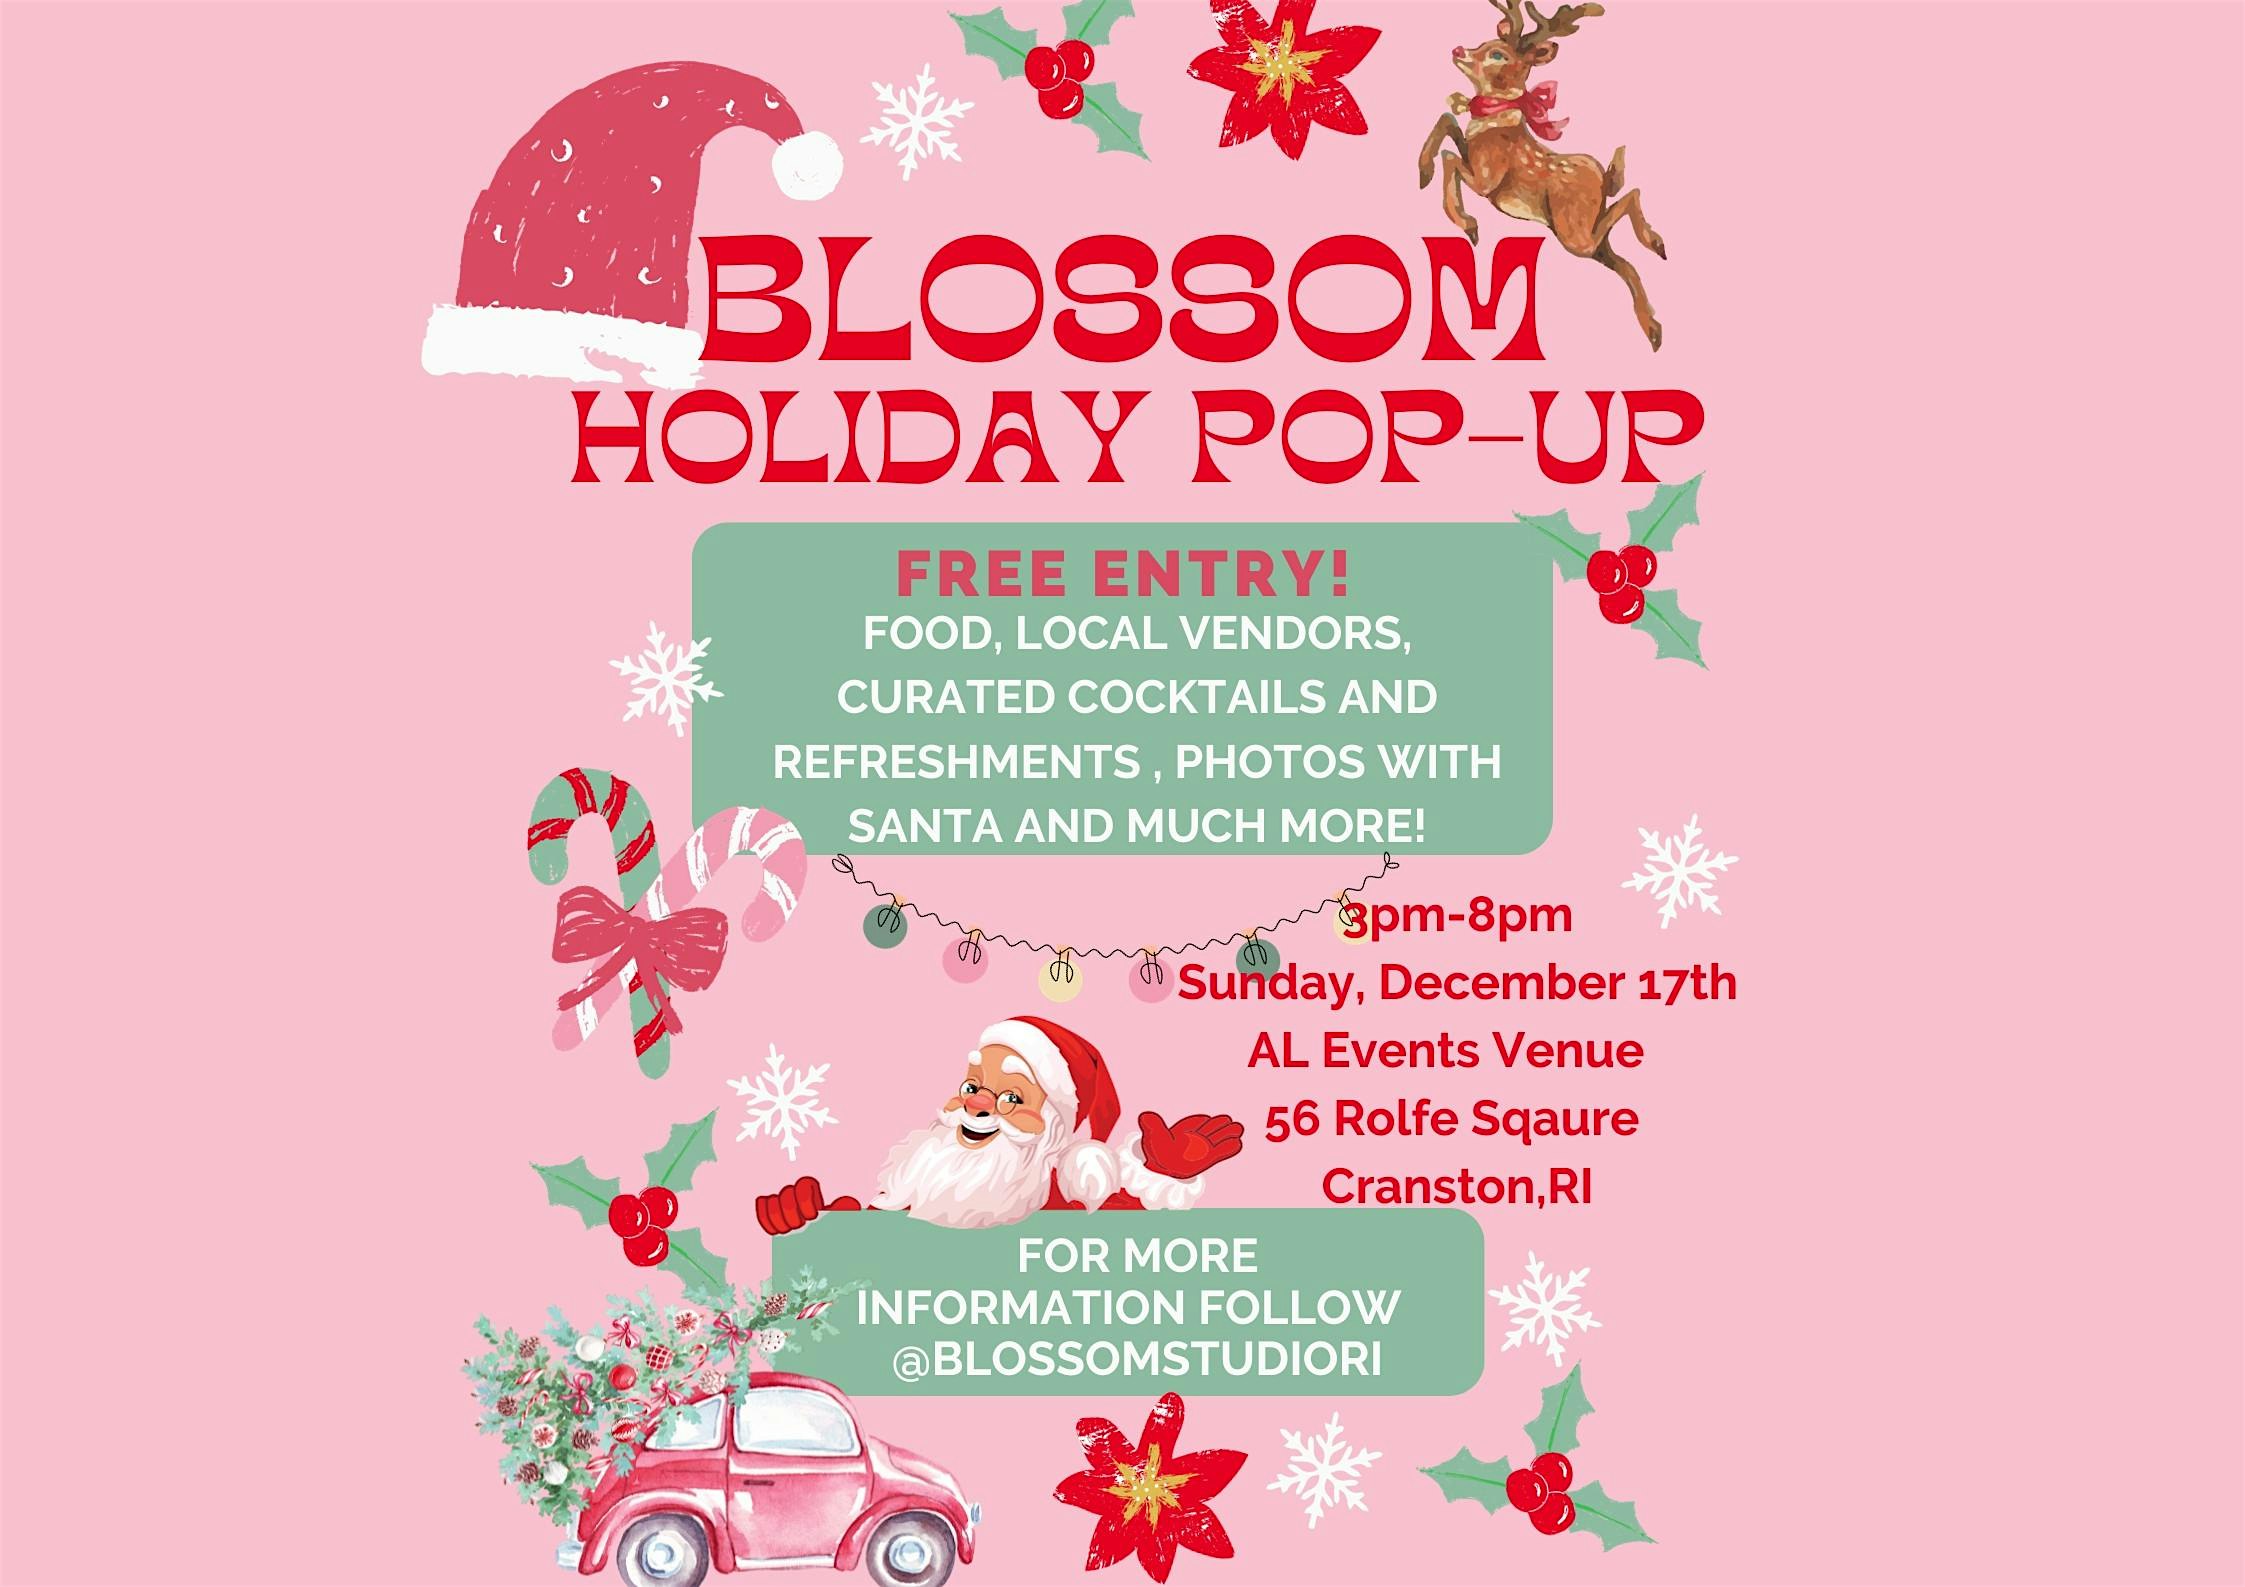 Blossom Holiday Pop Up/Community Event